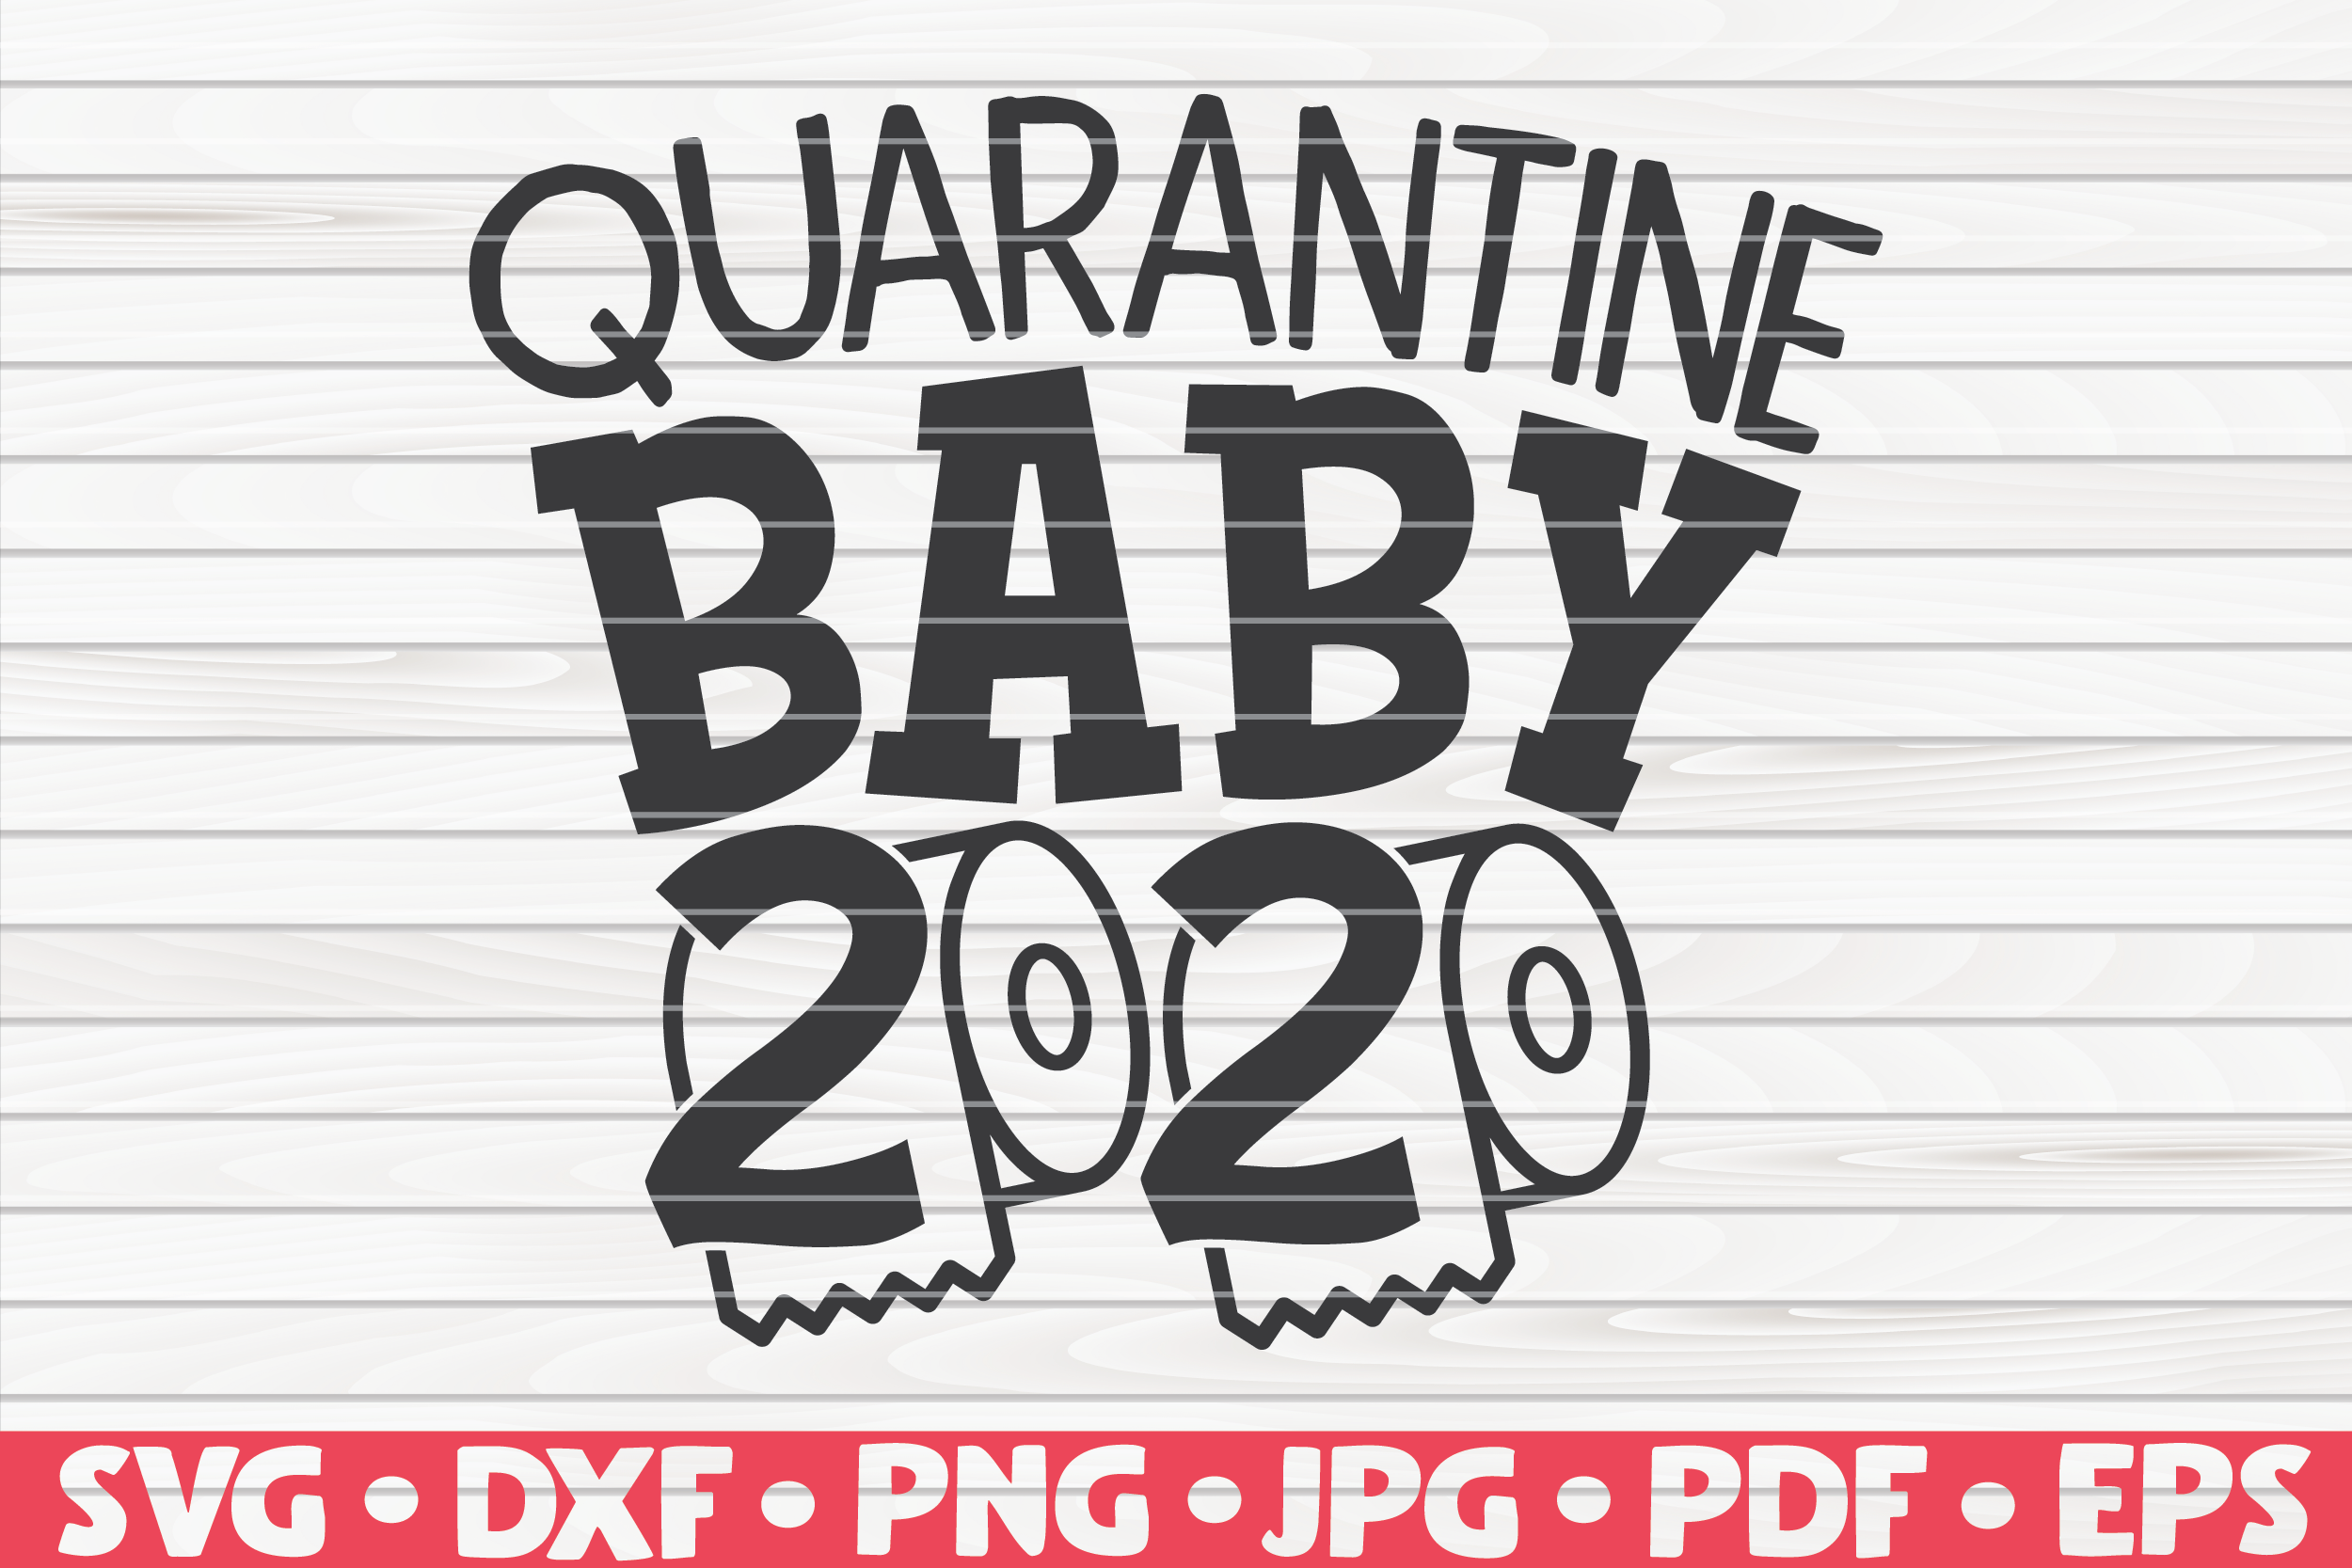 Download Quarantine baby 2020 SVG | Quarantine / Social distancing ...